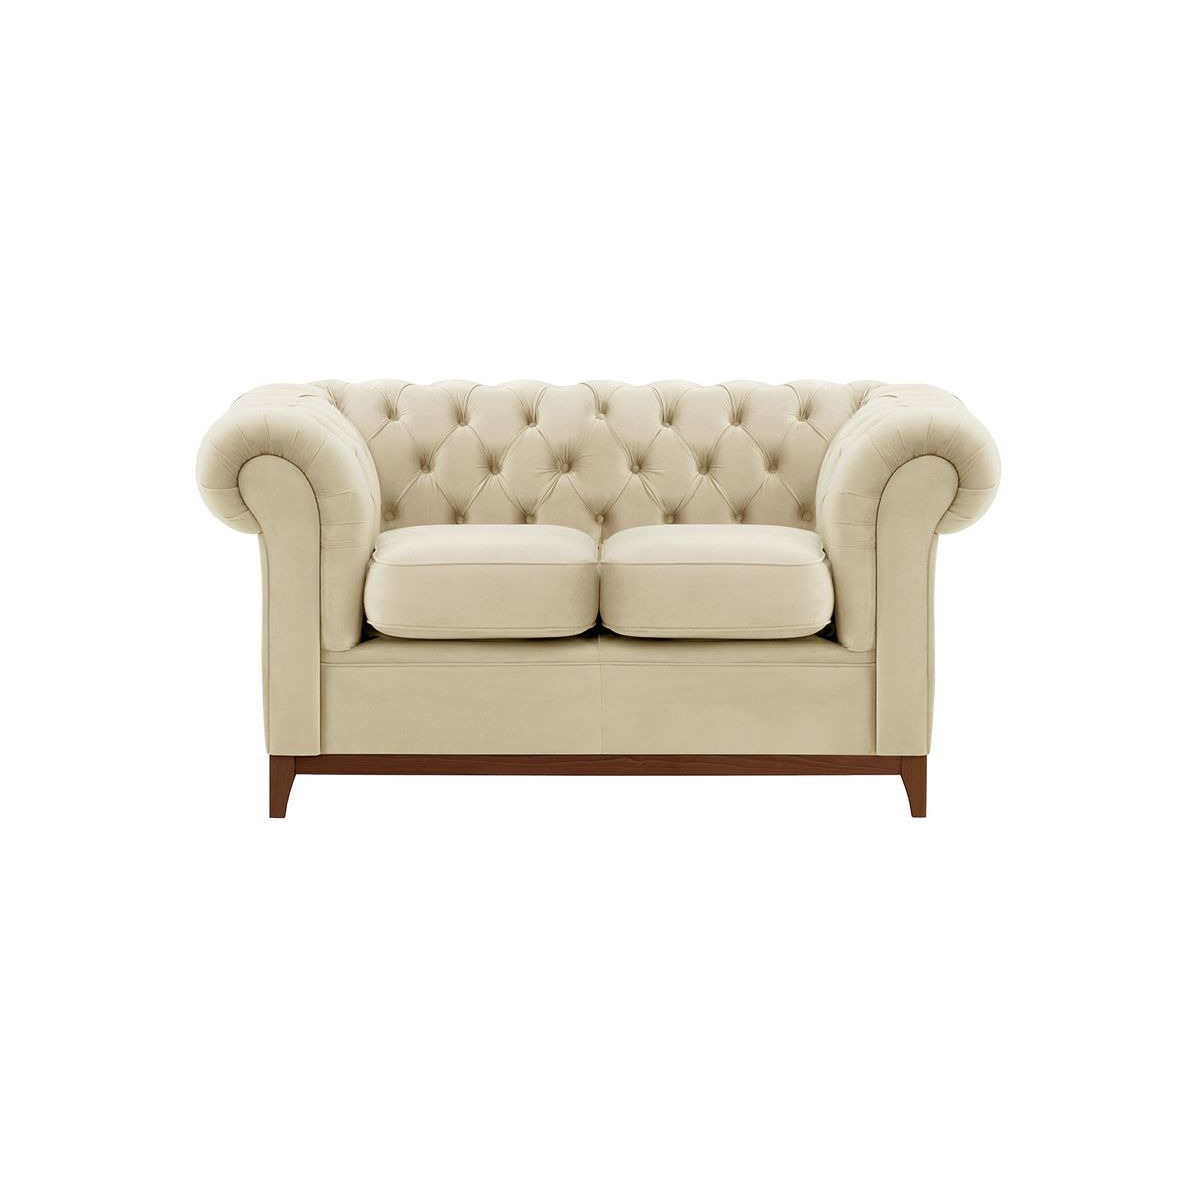 Chesterfield Wood 2-Seater Sofa, beige, Leg colour: aveo - image 1